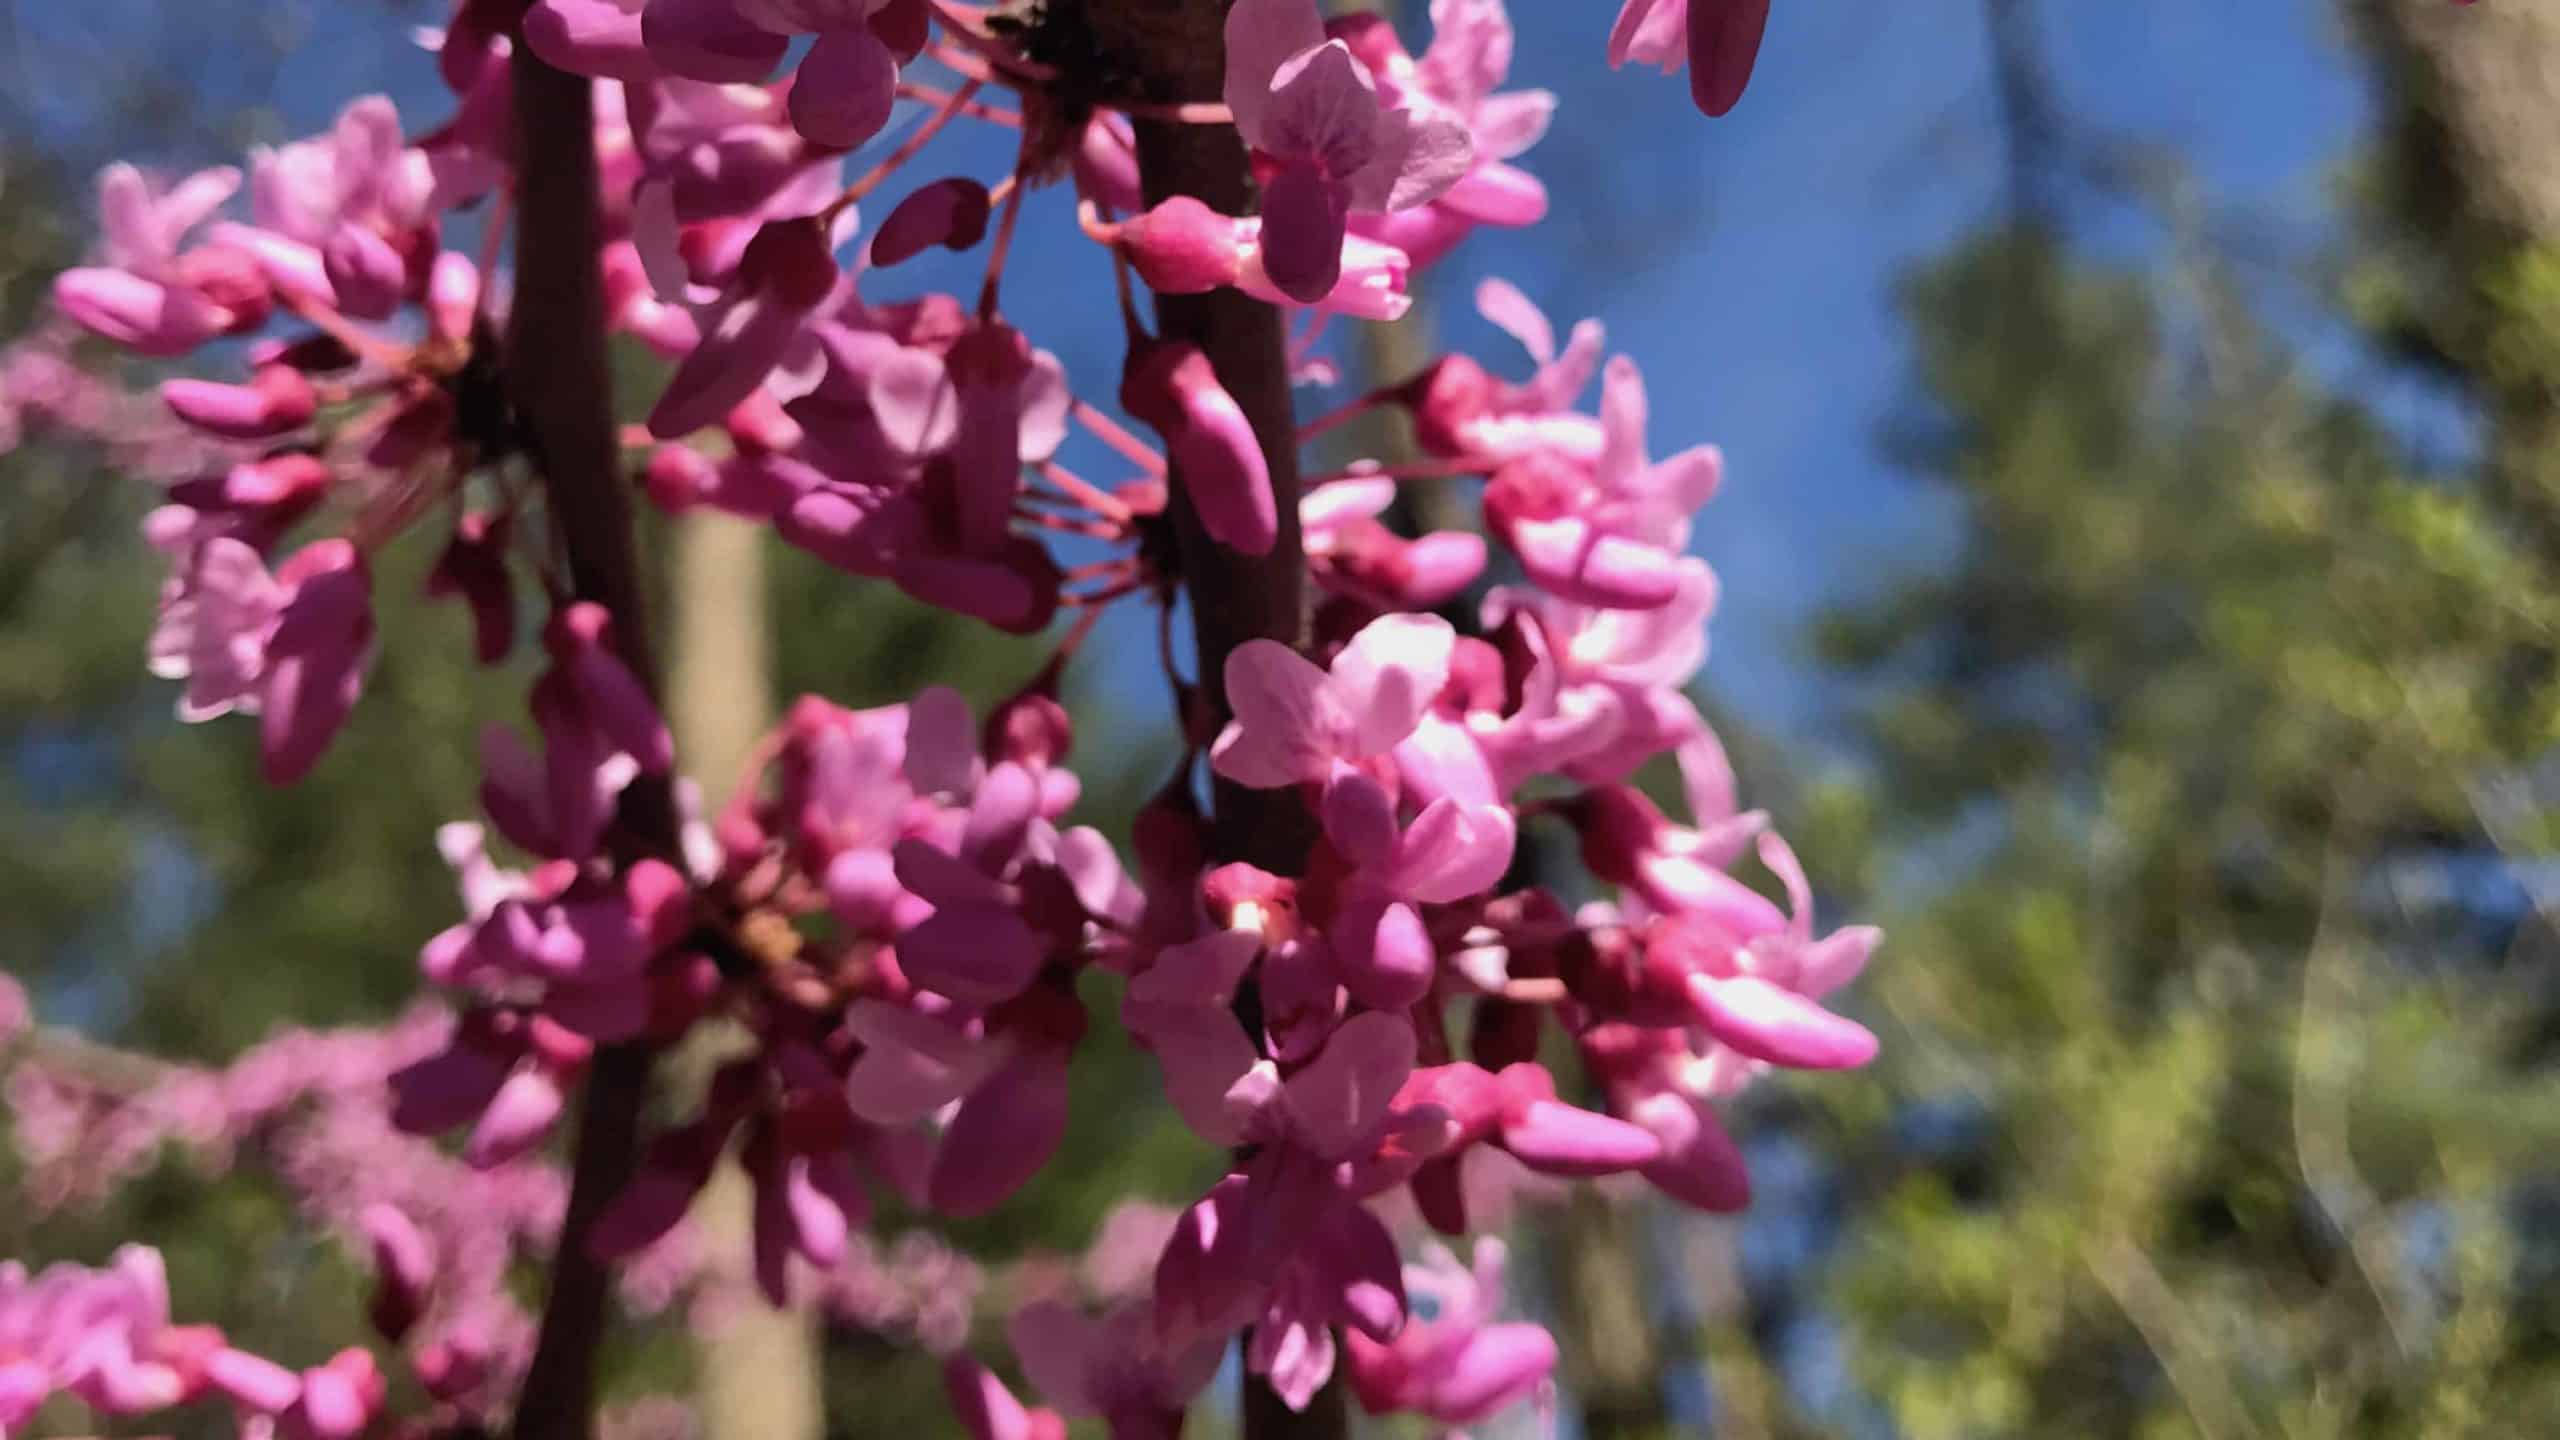 Redbud blooms in May at the Berkshire Botanical Garden in Stockbridge.